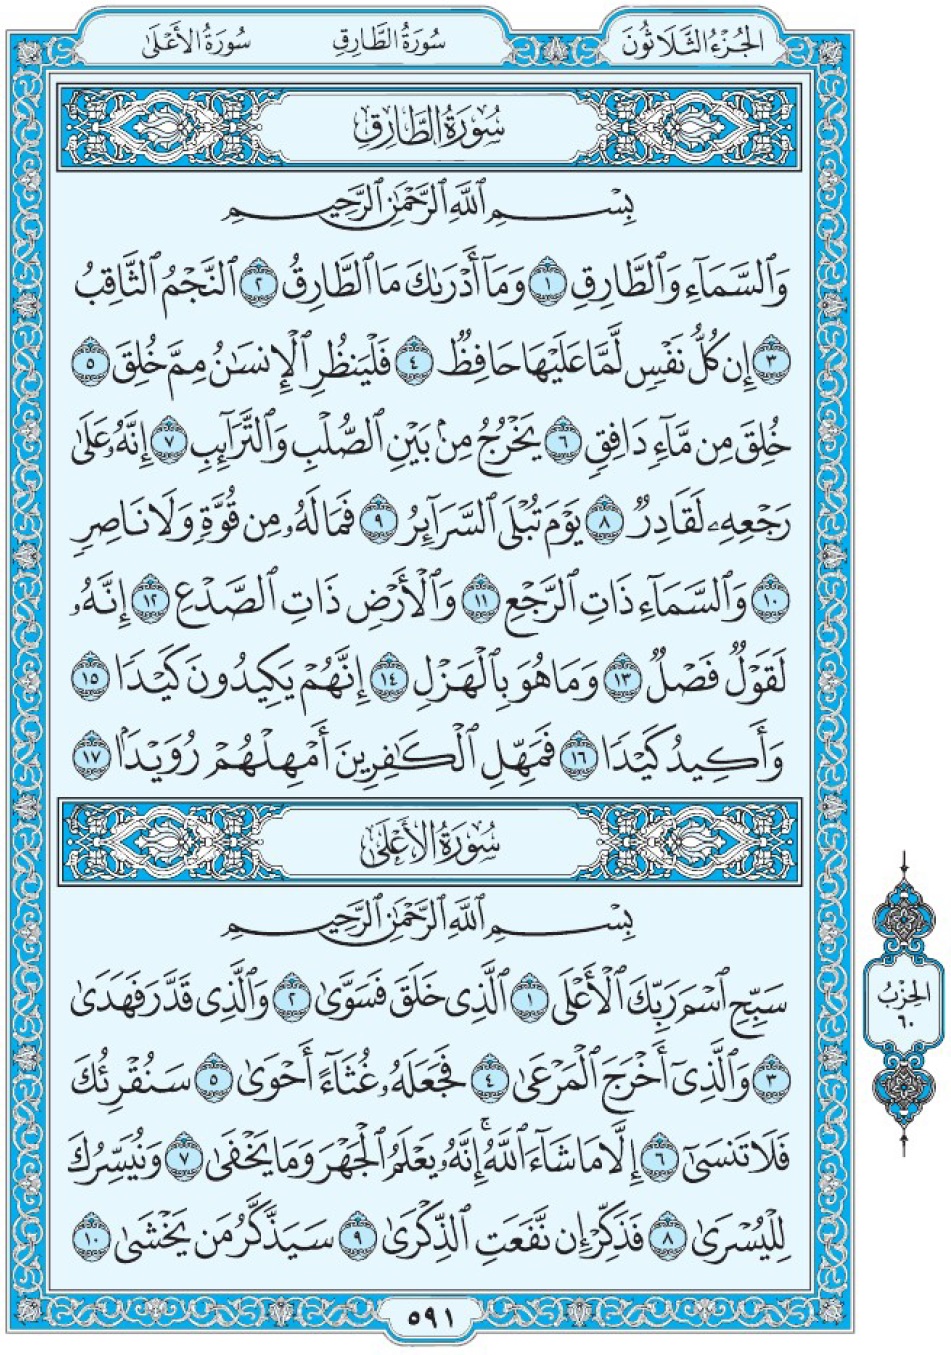 Коран Мединский мусхаф страница 591 сура 86 ат-Тарик, 87 аль-А‘ля, سورة الطارق الأعلى 